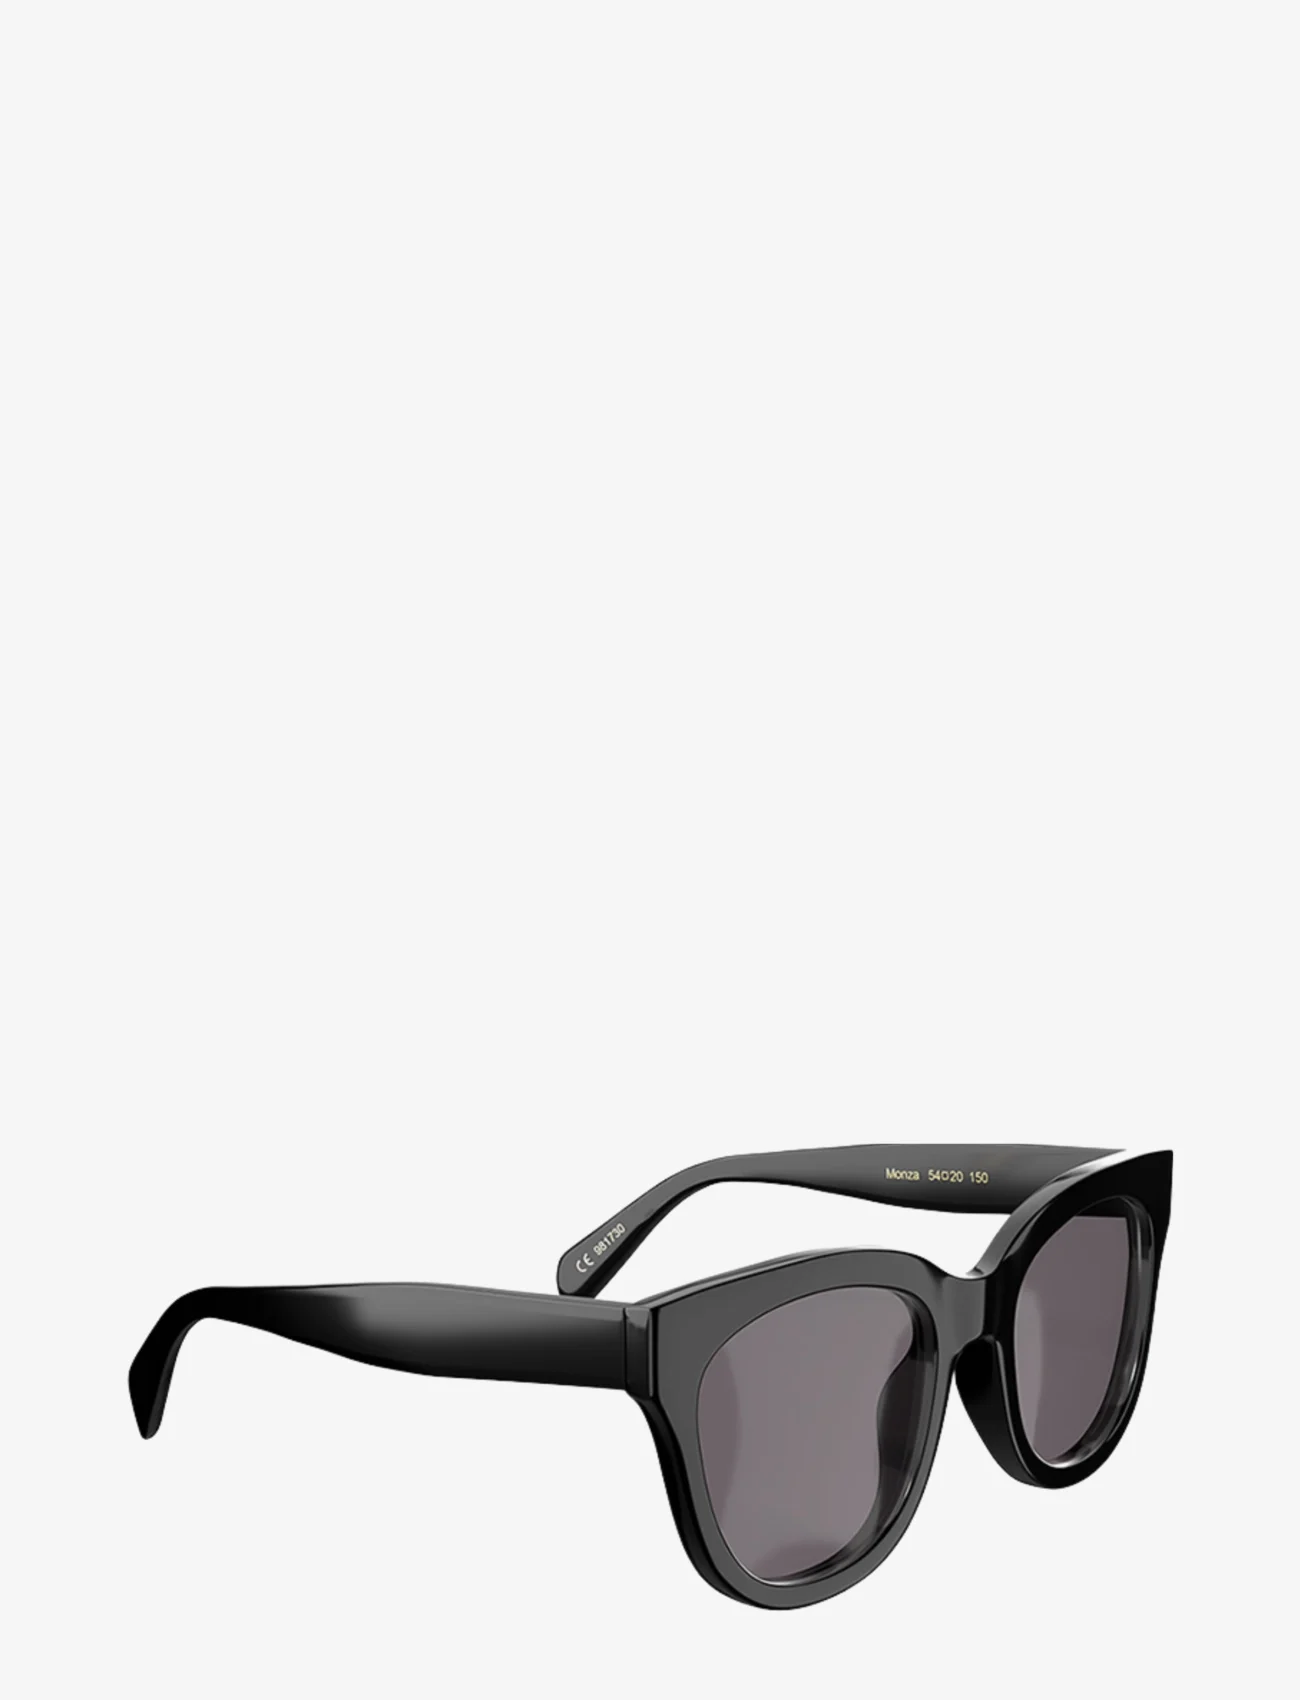 Corlin Eyewear - Monza - d formas - monza black black - 1